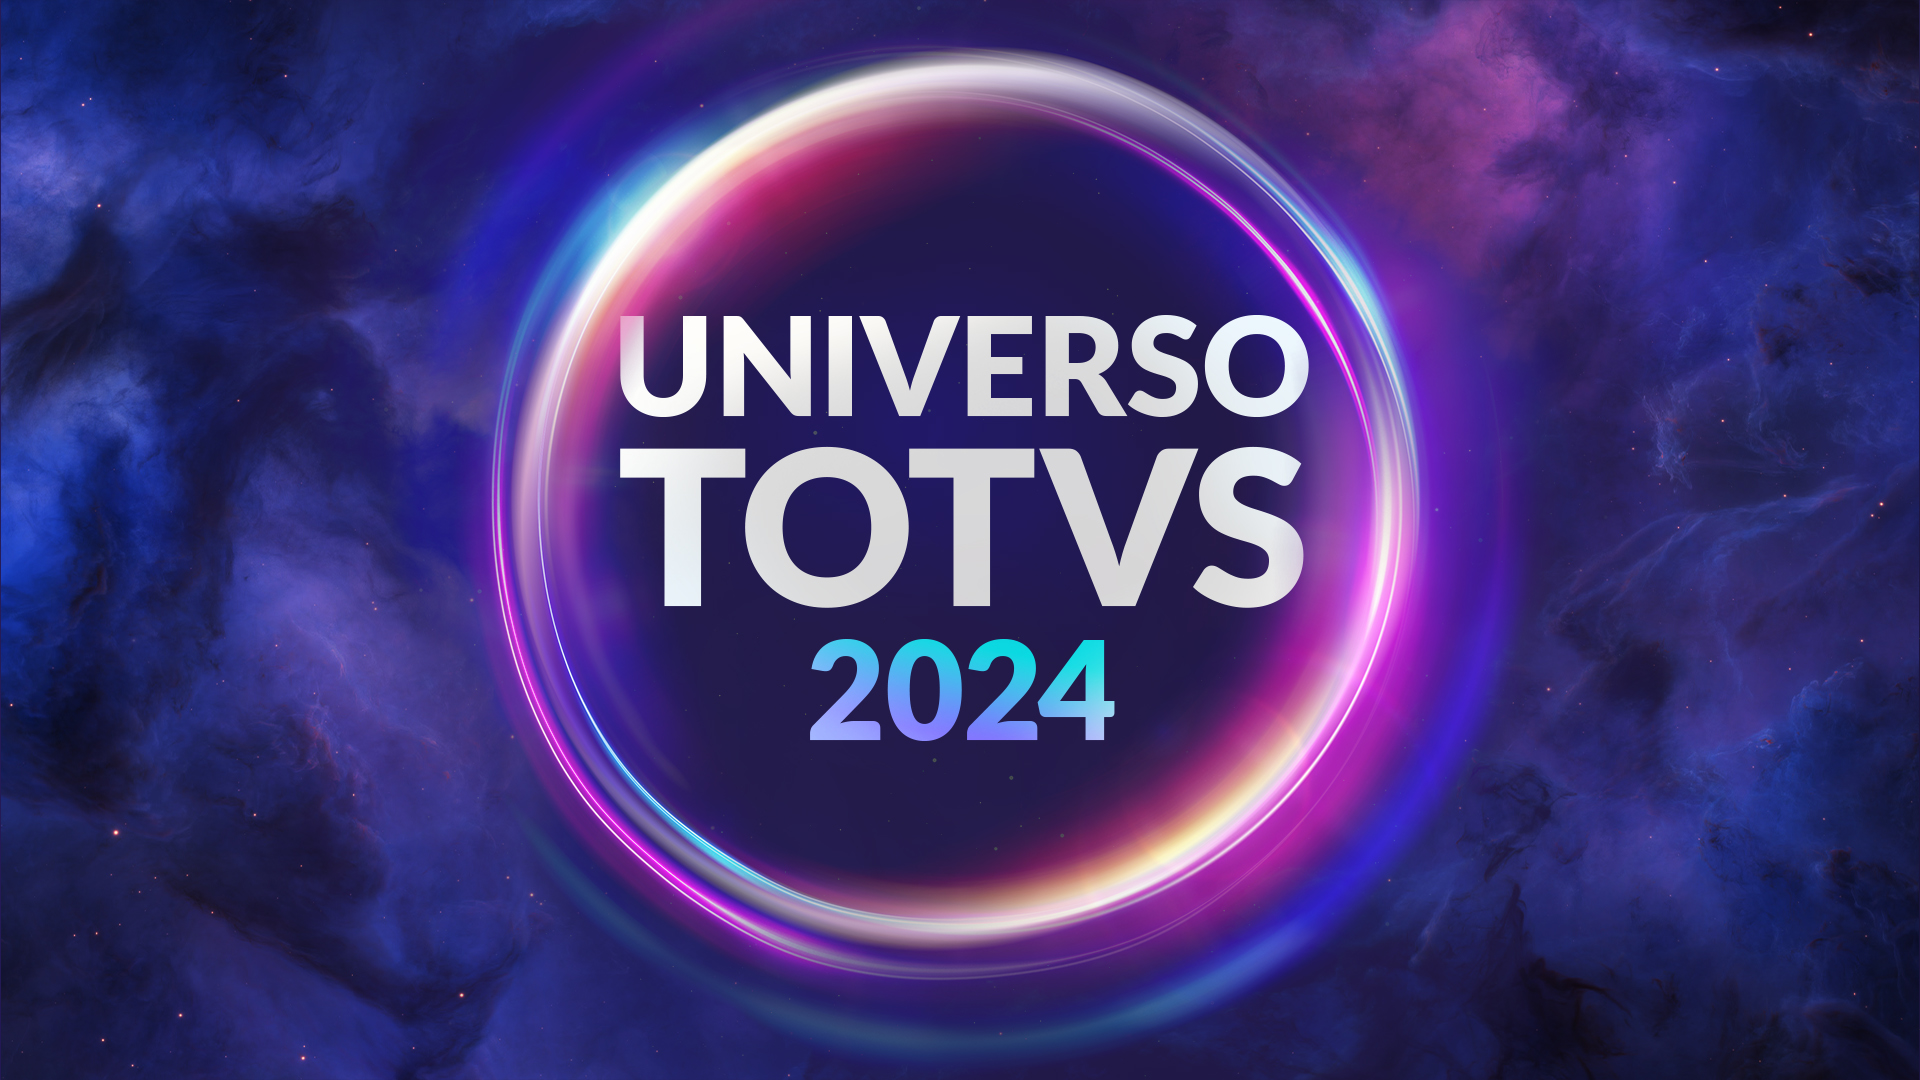 Universo TOTVS 2024 Expo Center Norte